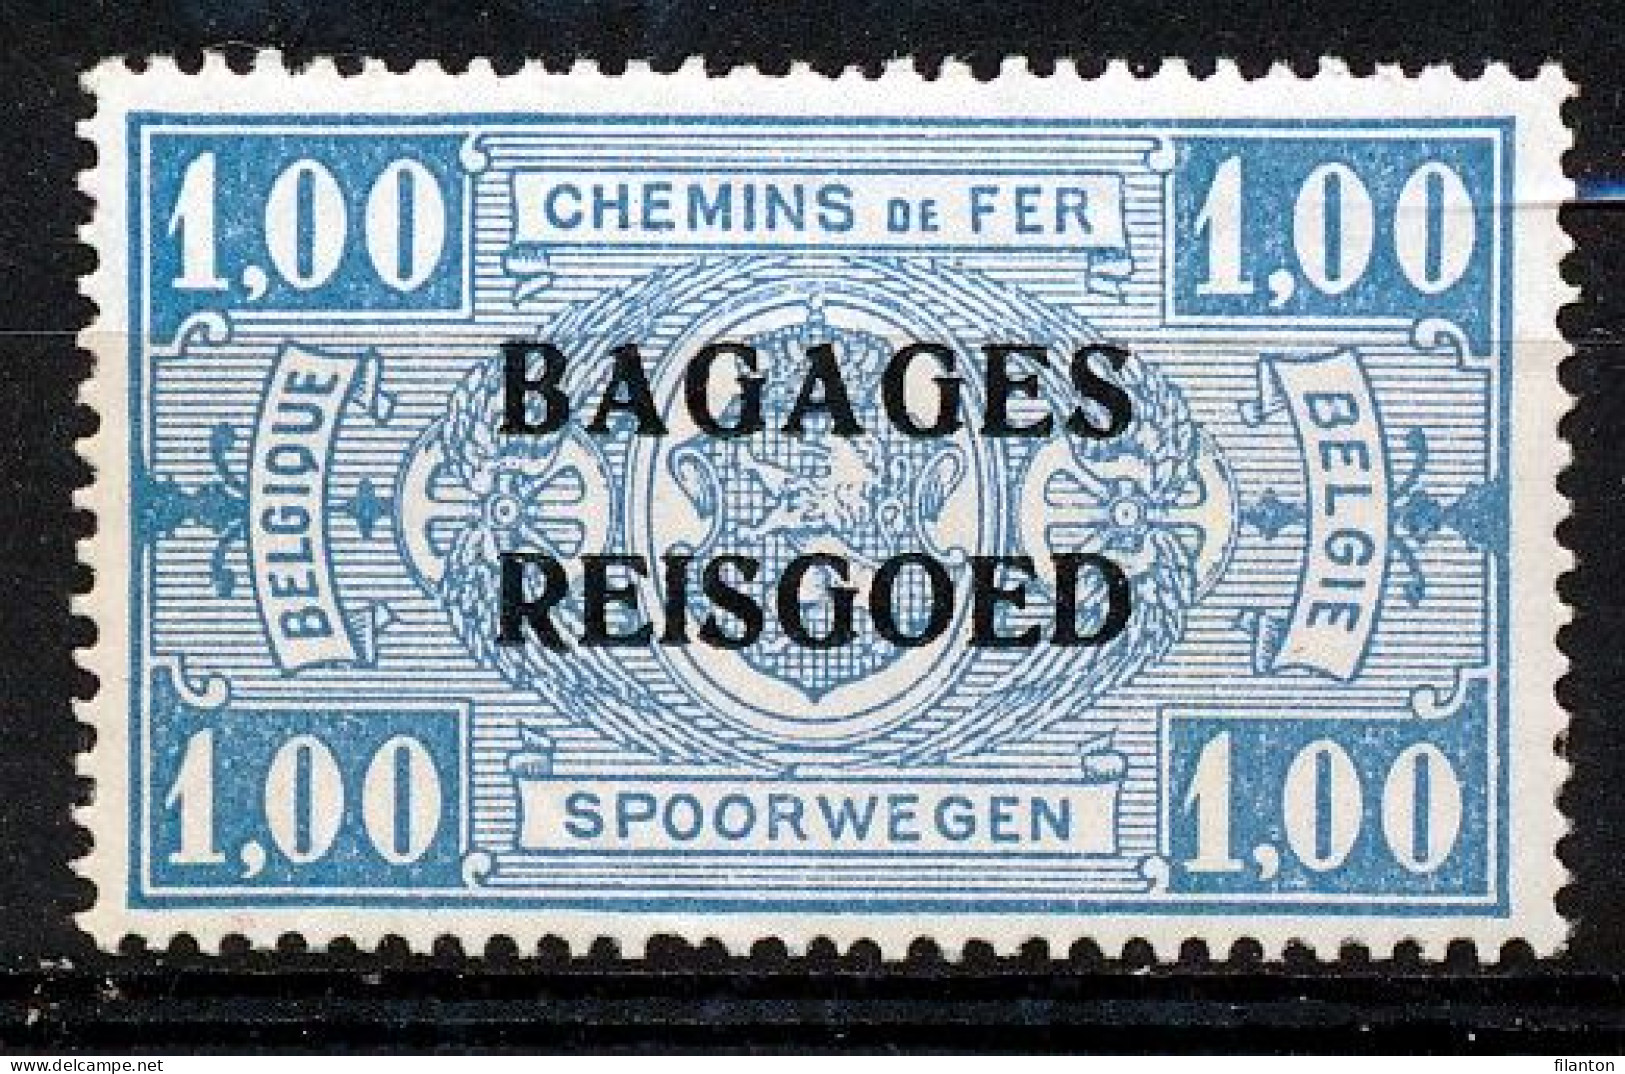 BELGIE - OBP Nr BA 10 - Bagages - MNH** - Cote 24,00 € - Reisgoedzegels [BA]